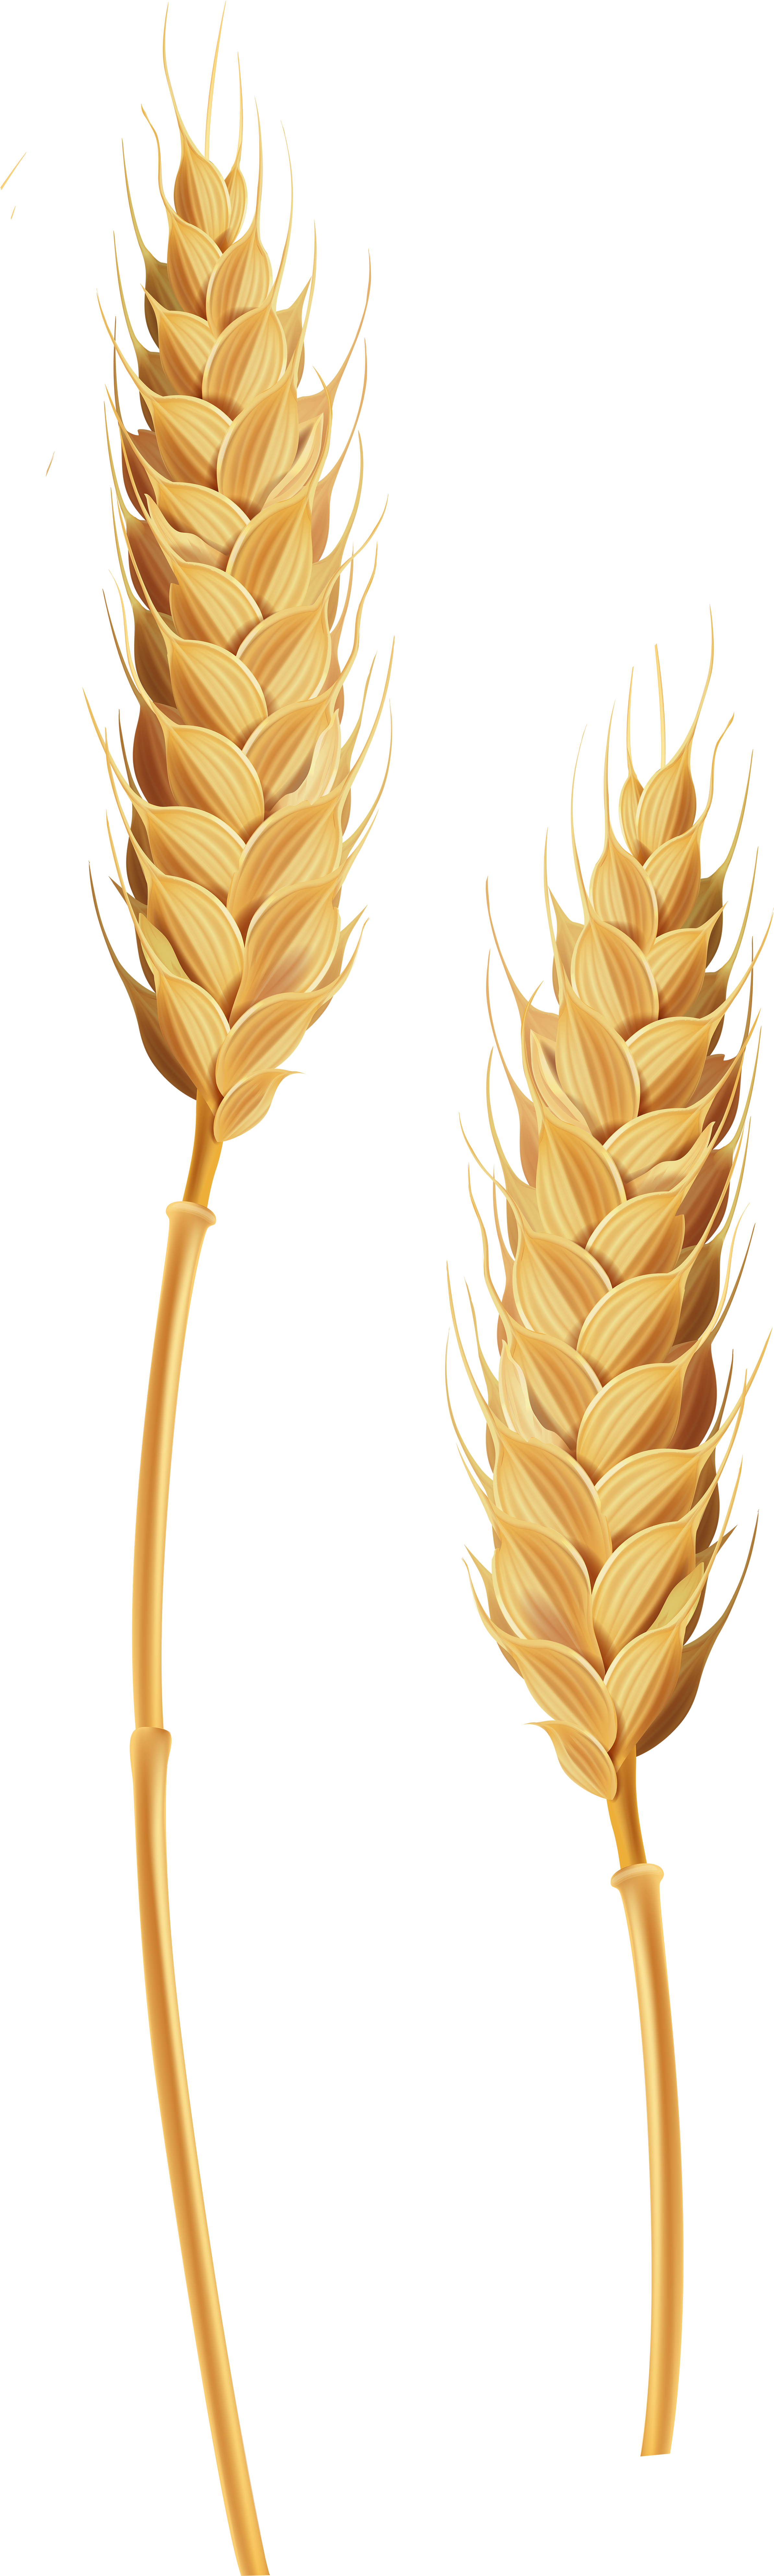 Wheat Stalks Transparent Clip Art Image - Wheat Transparent (2573x8000)